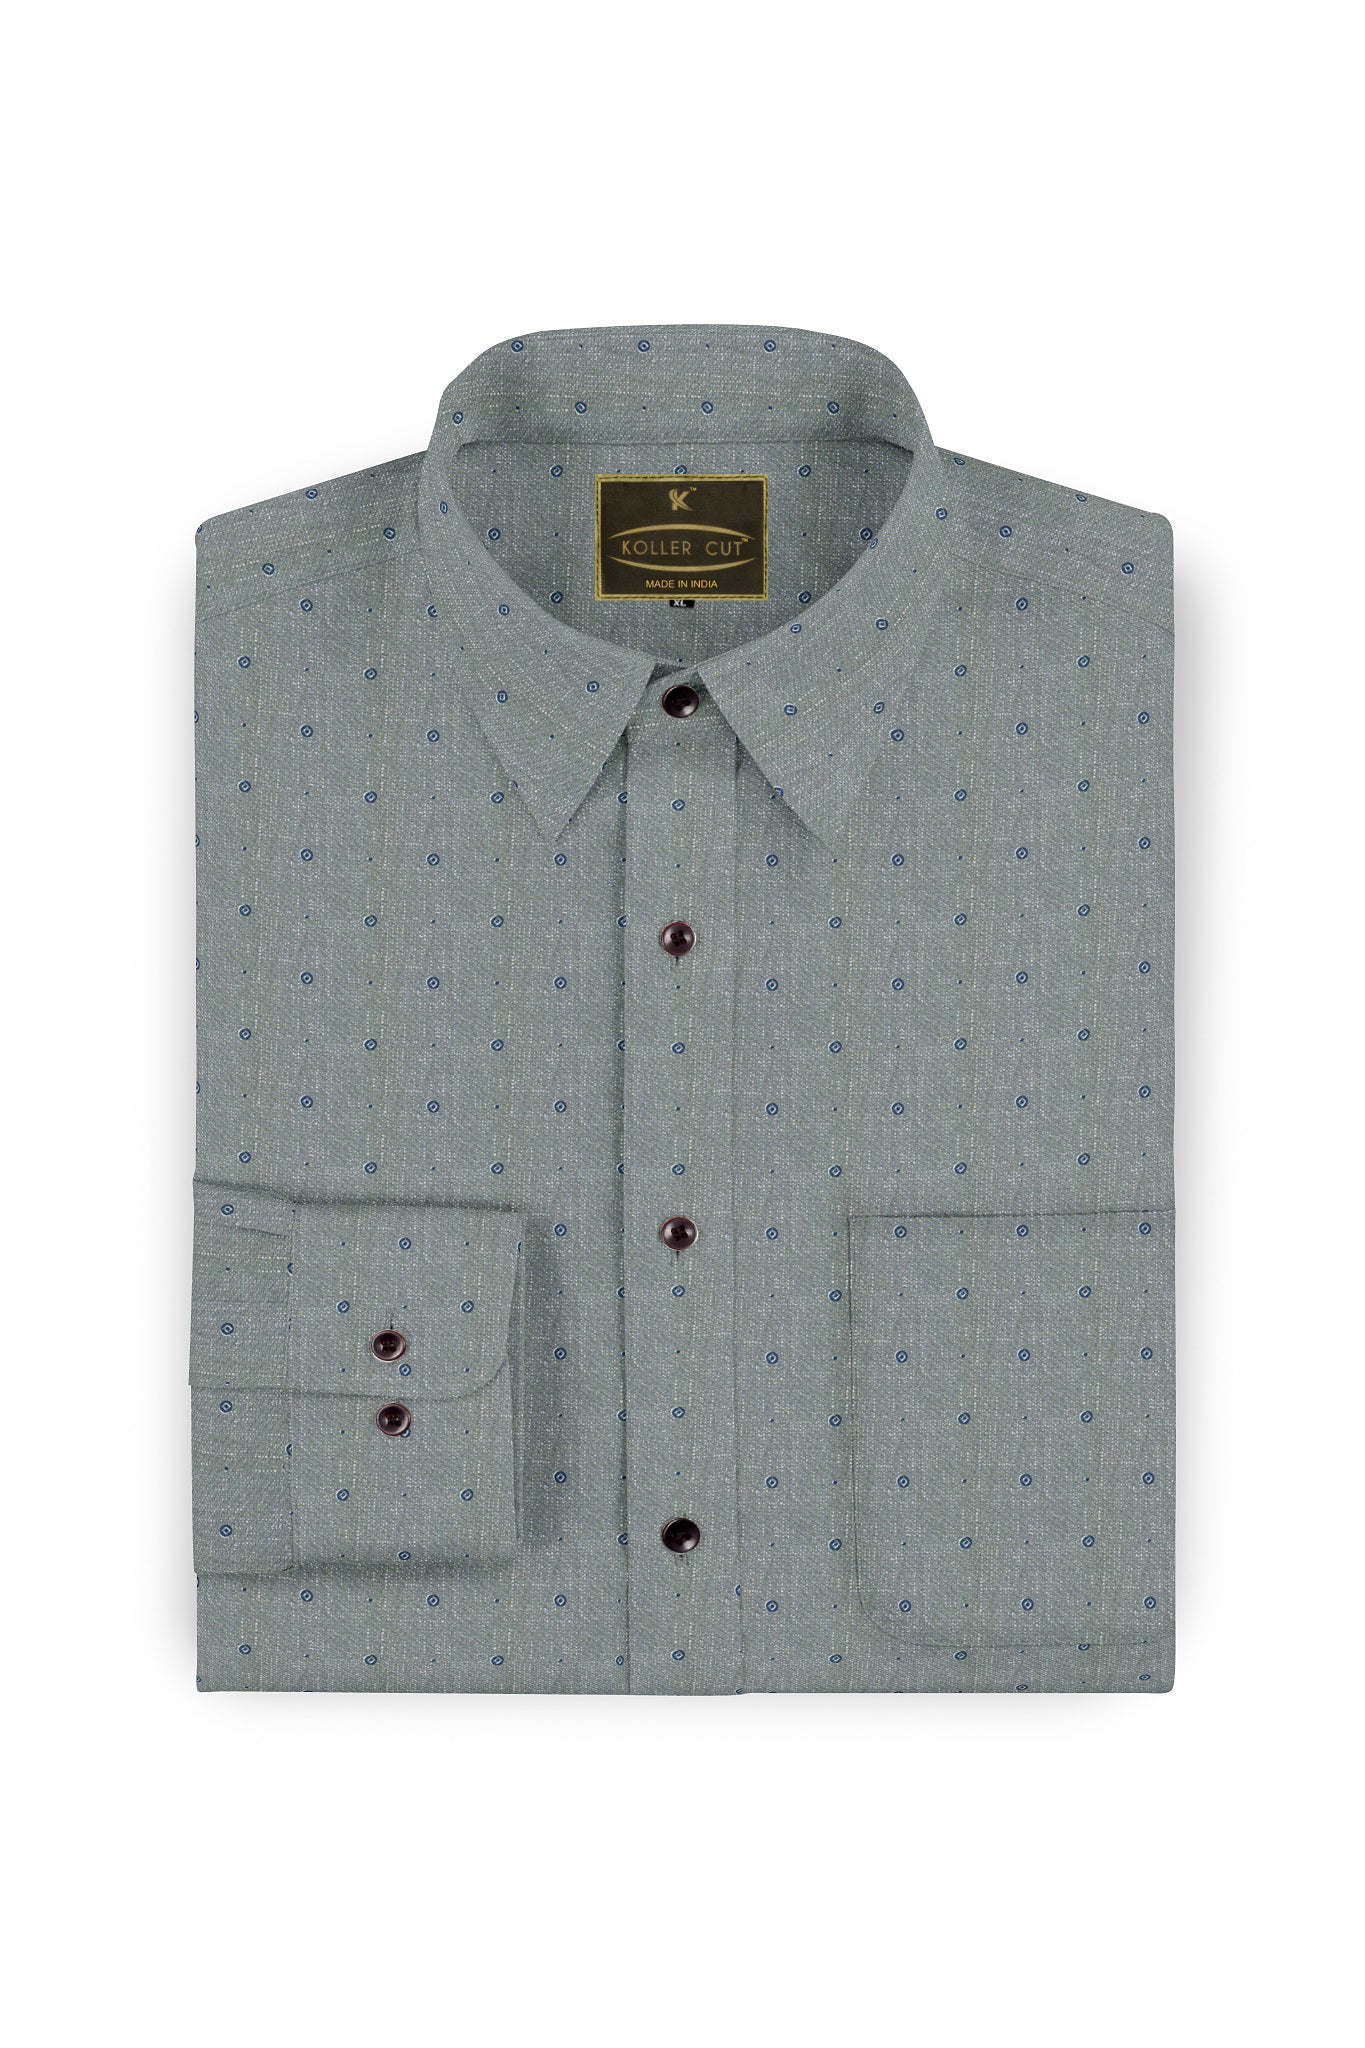 Rhino Gray with Diamond in Circle Printed Cotton Shirt